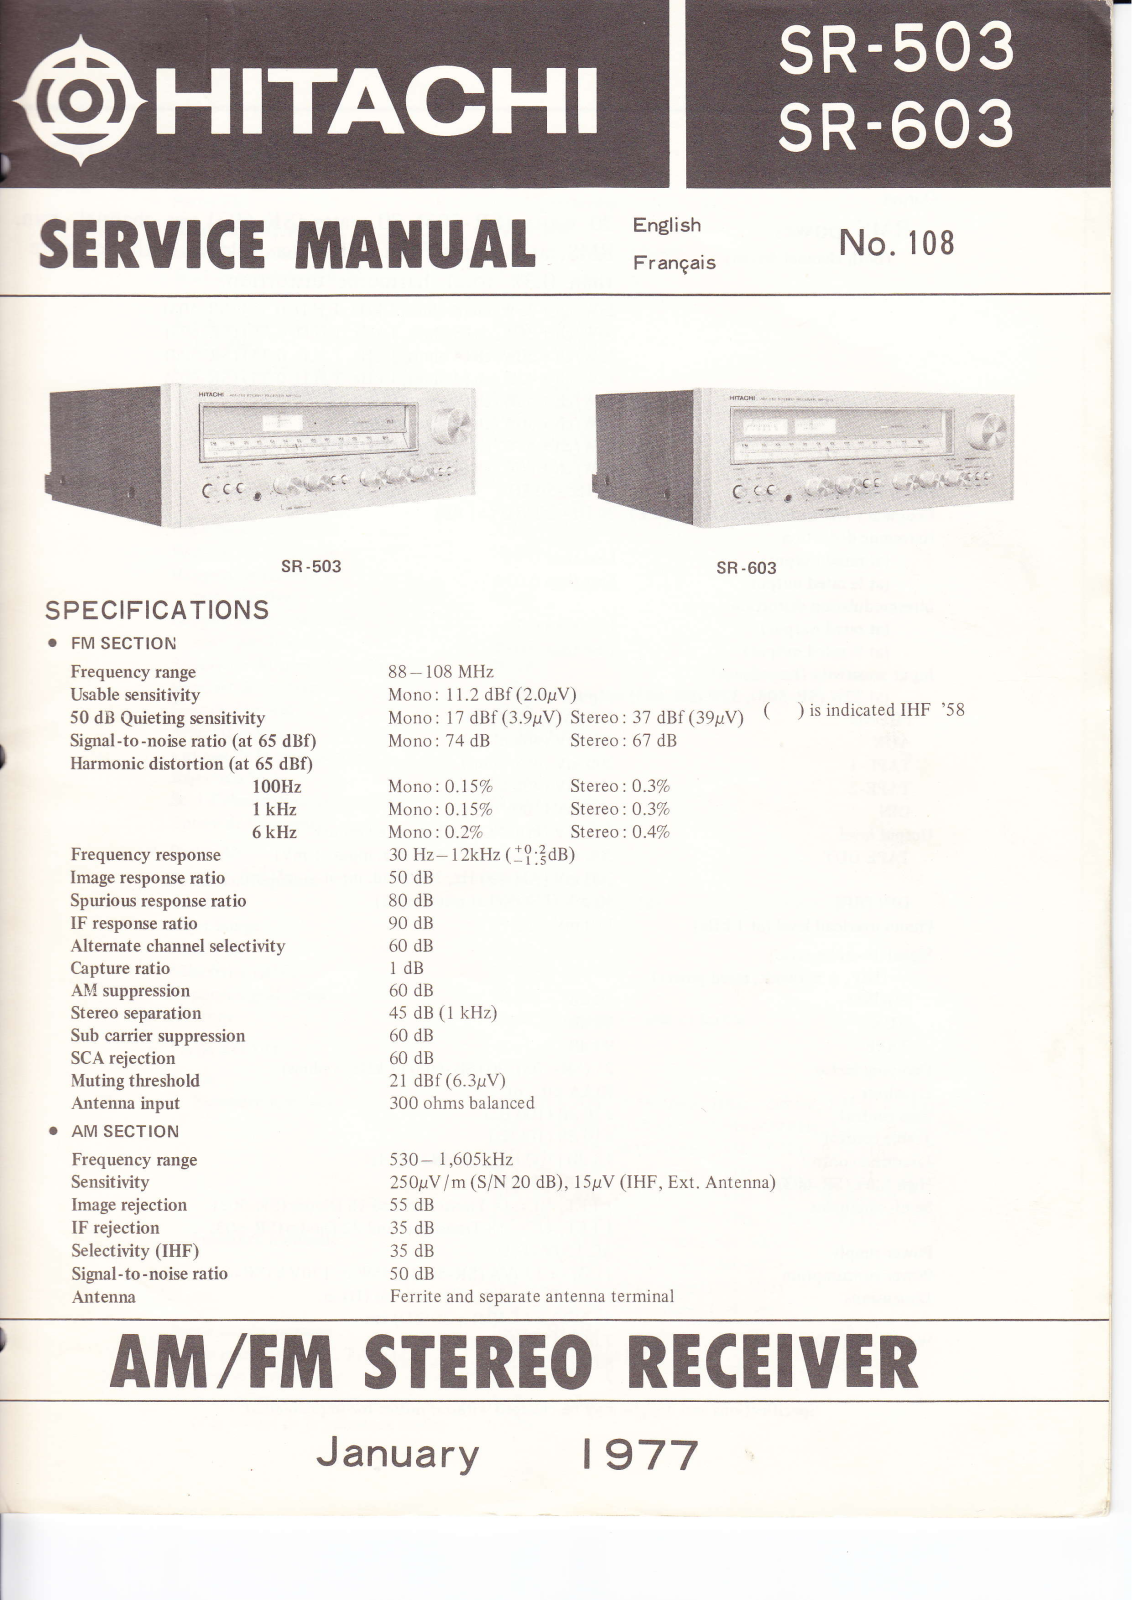 Hitachi SR-603, SR-503 Service Manual